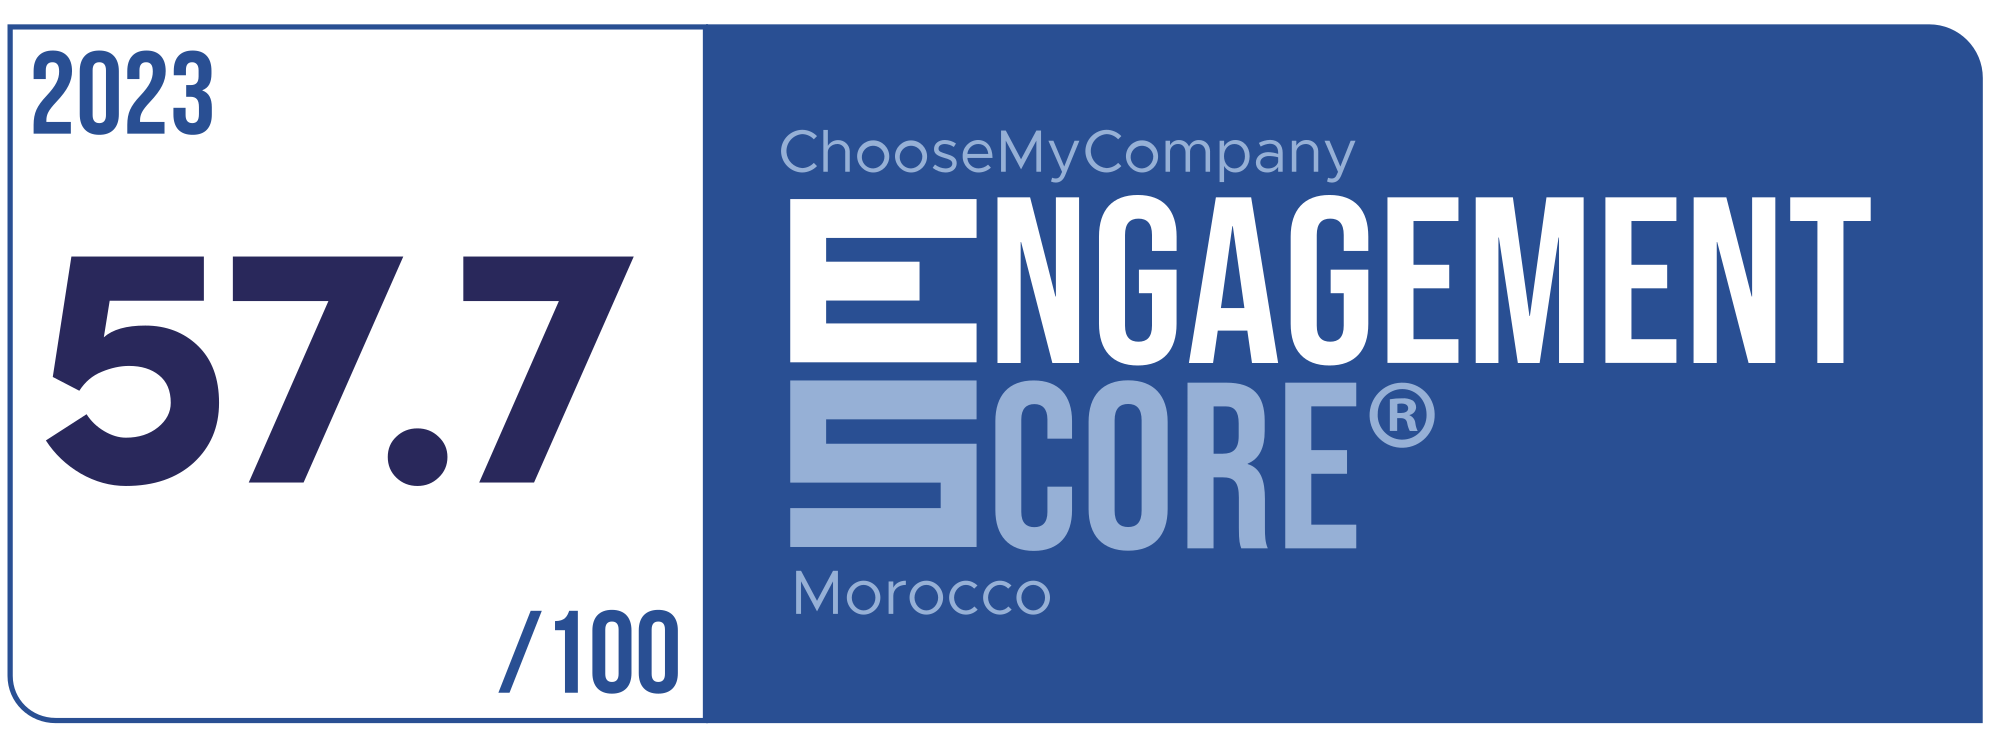 Label Engagement Score 2023 Morocco